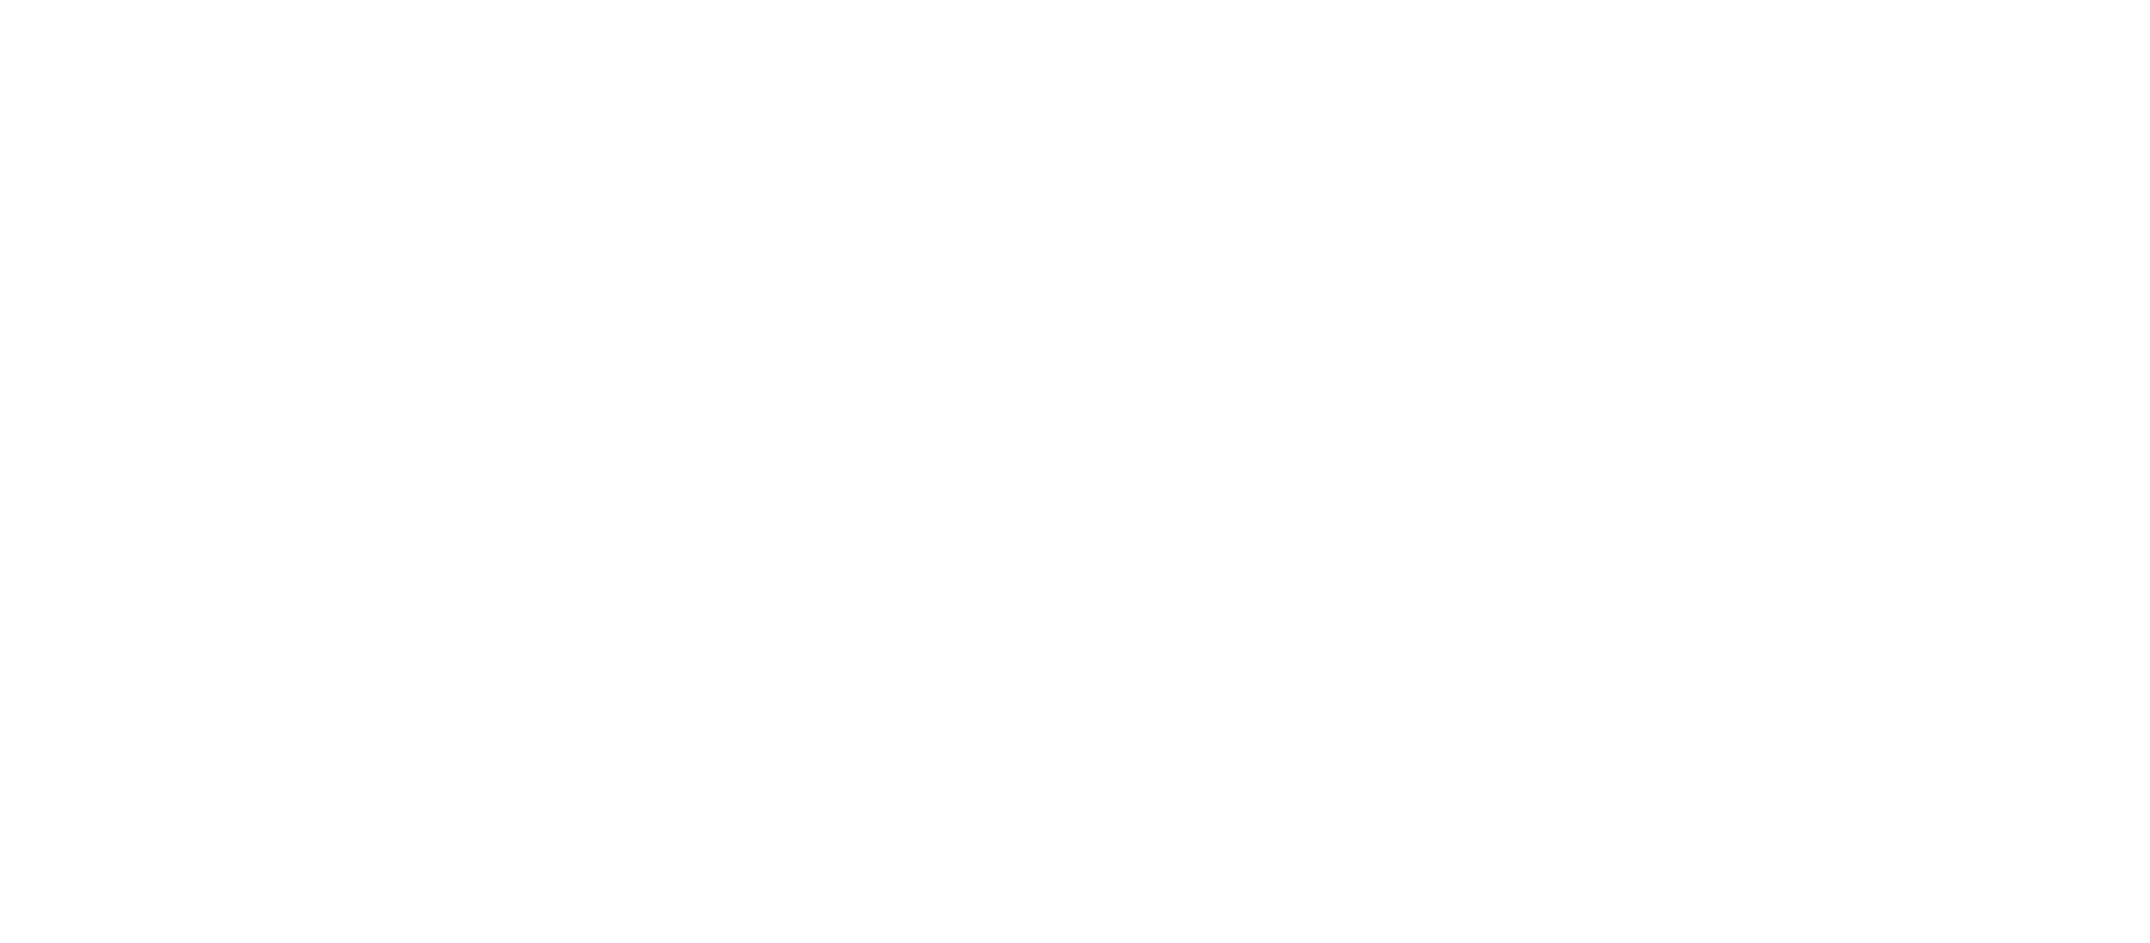 Puffin Technologies